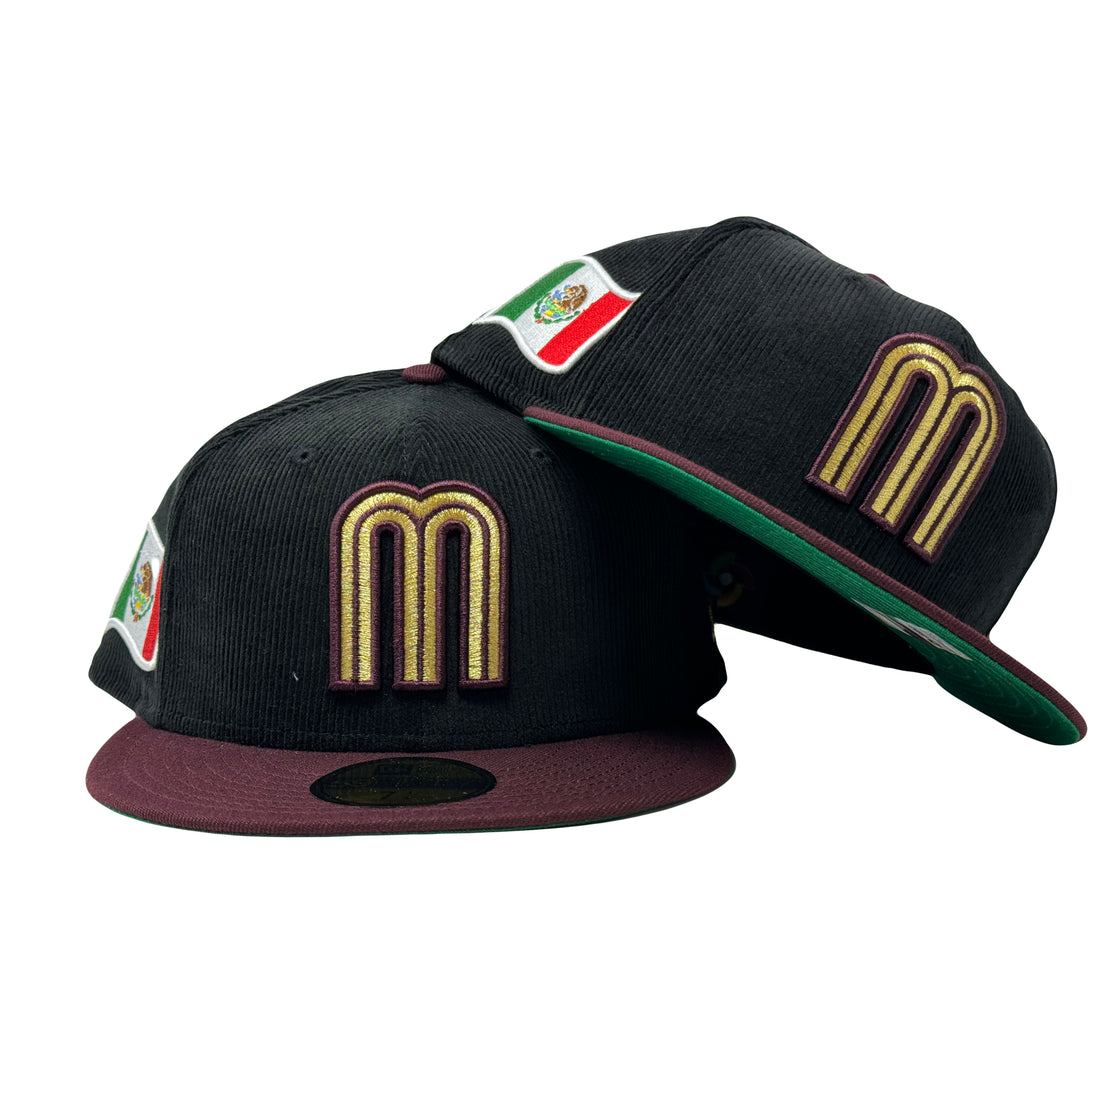 Mexico World Baseball Classic Black Corduroy Crown Maroon visor Green Brim New Era Fitted Hat